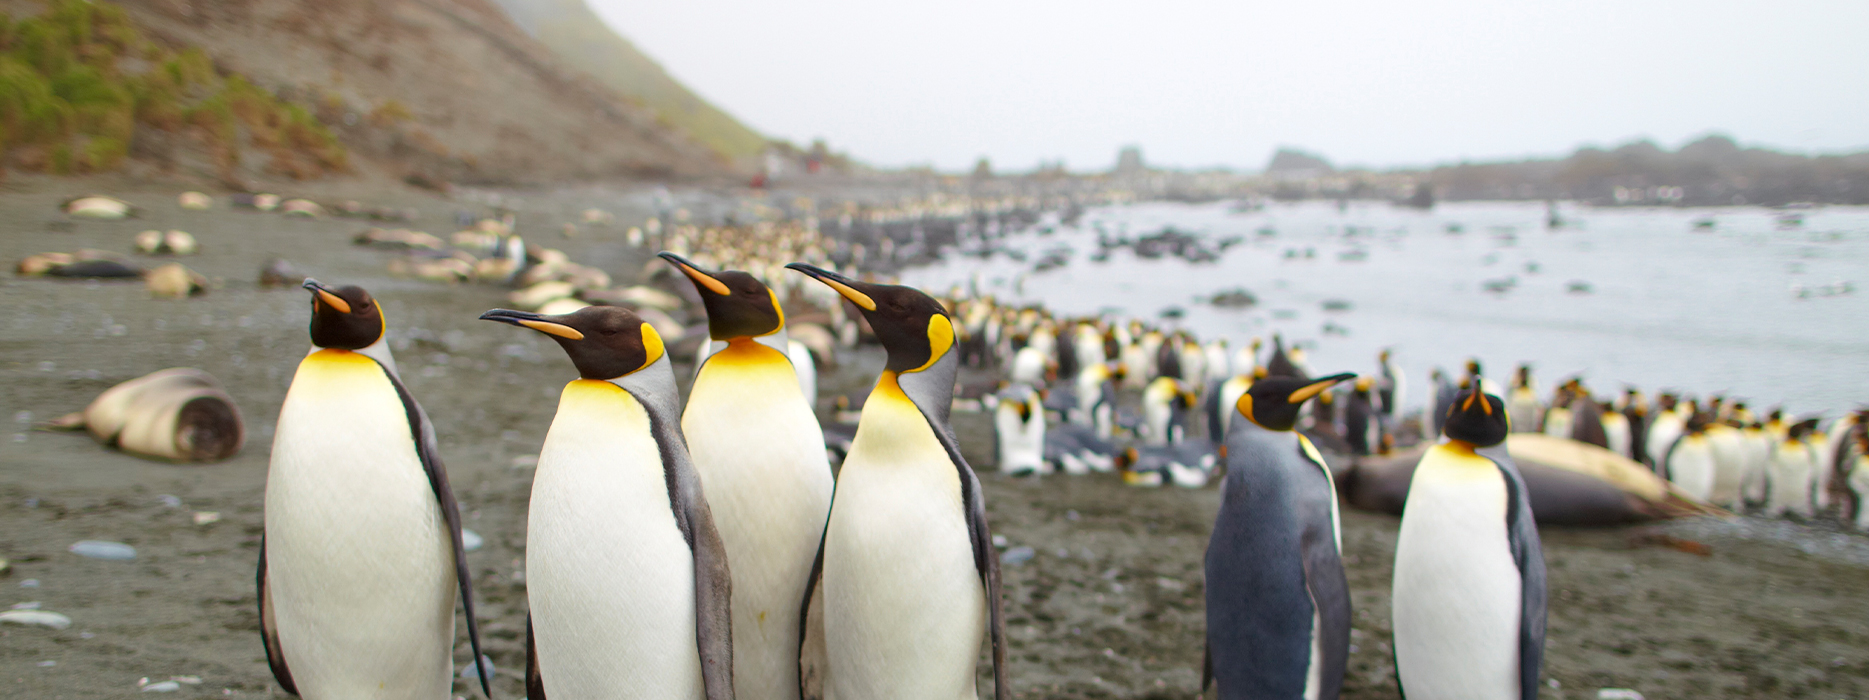 King Penguins in Sub Antarctic Islands